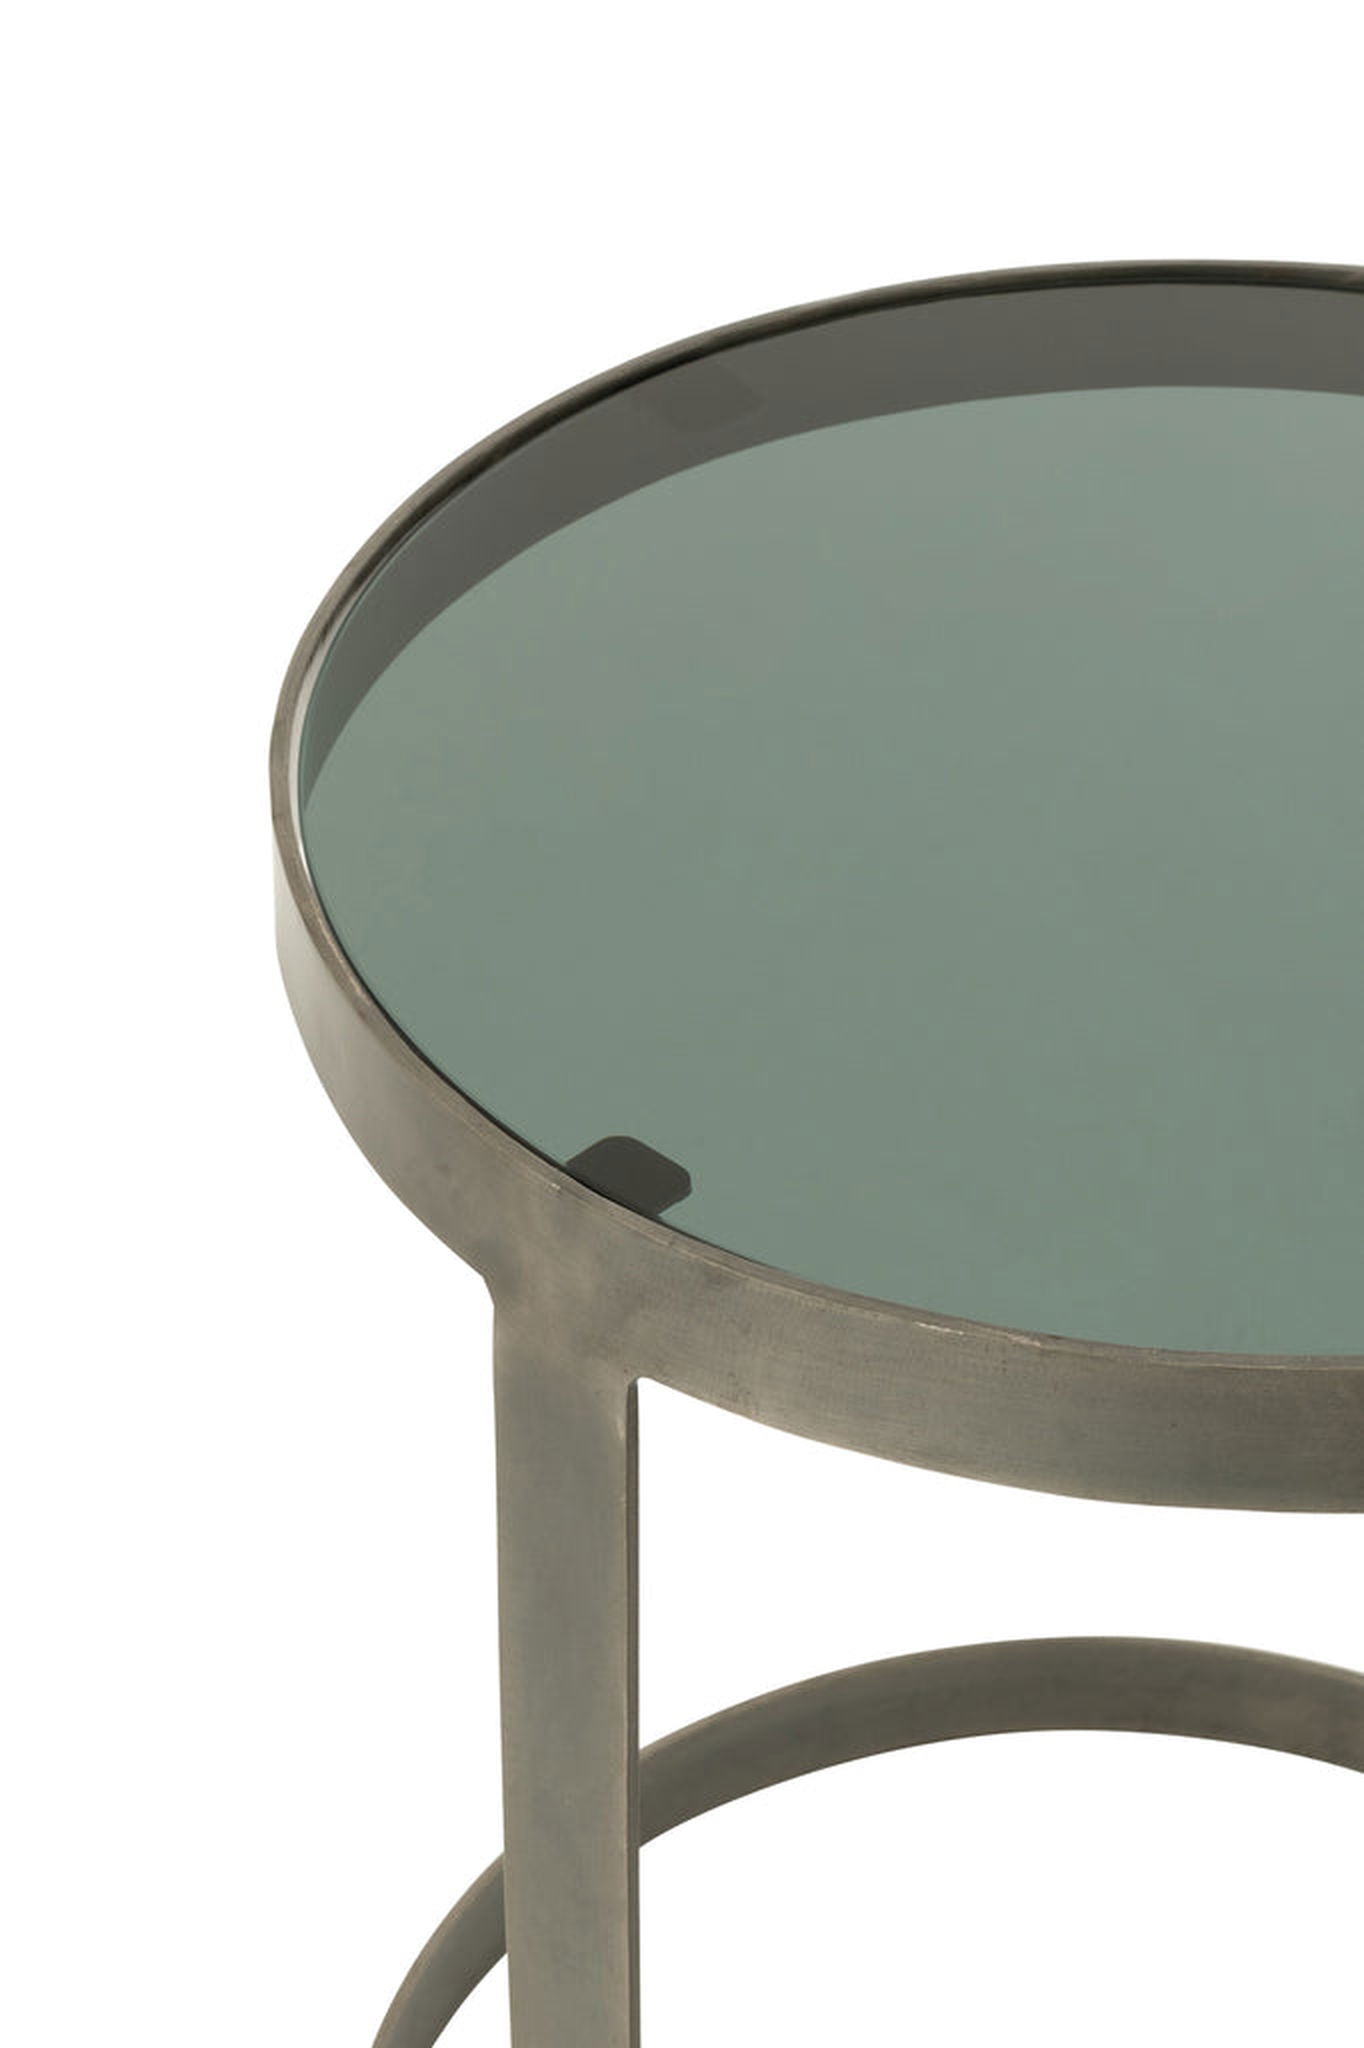 Set Of 3 Side Tables Round Iron/Glass Grey - vivahabitat.com